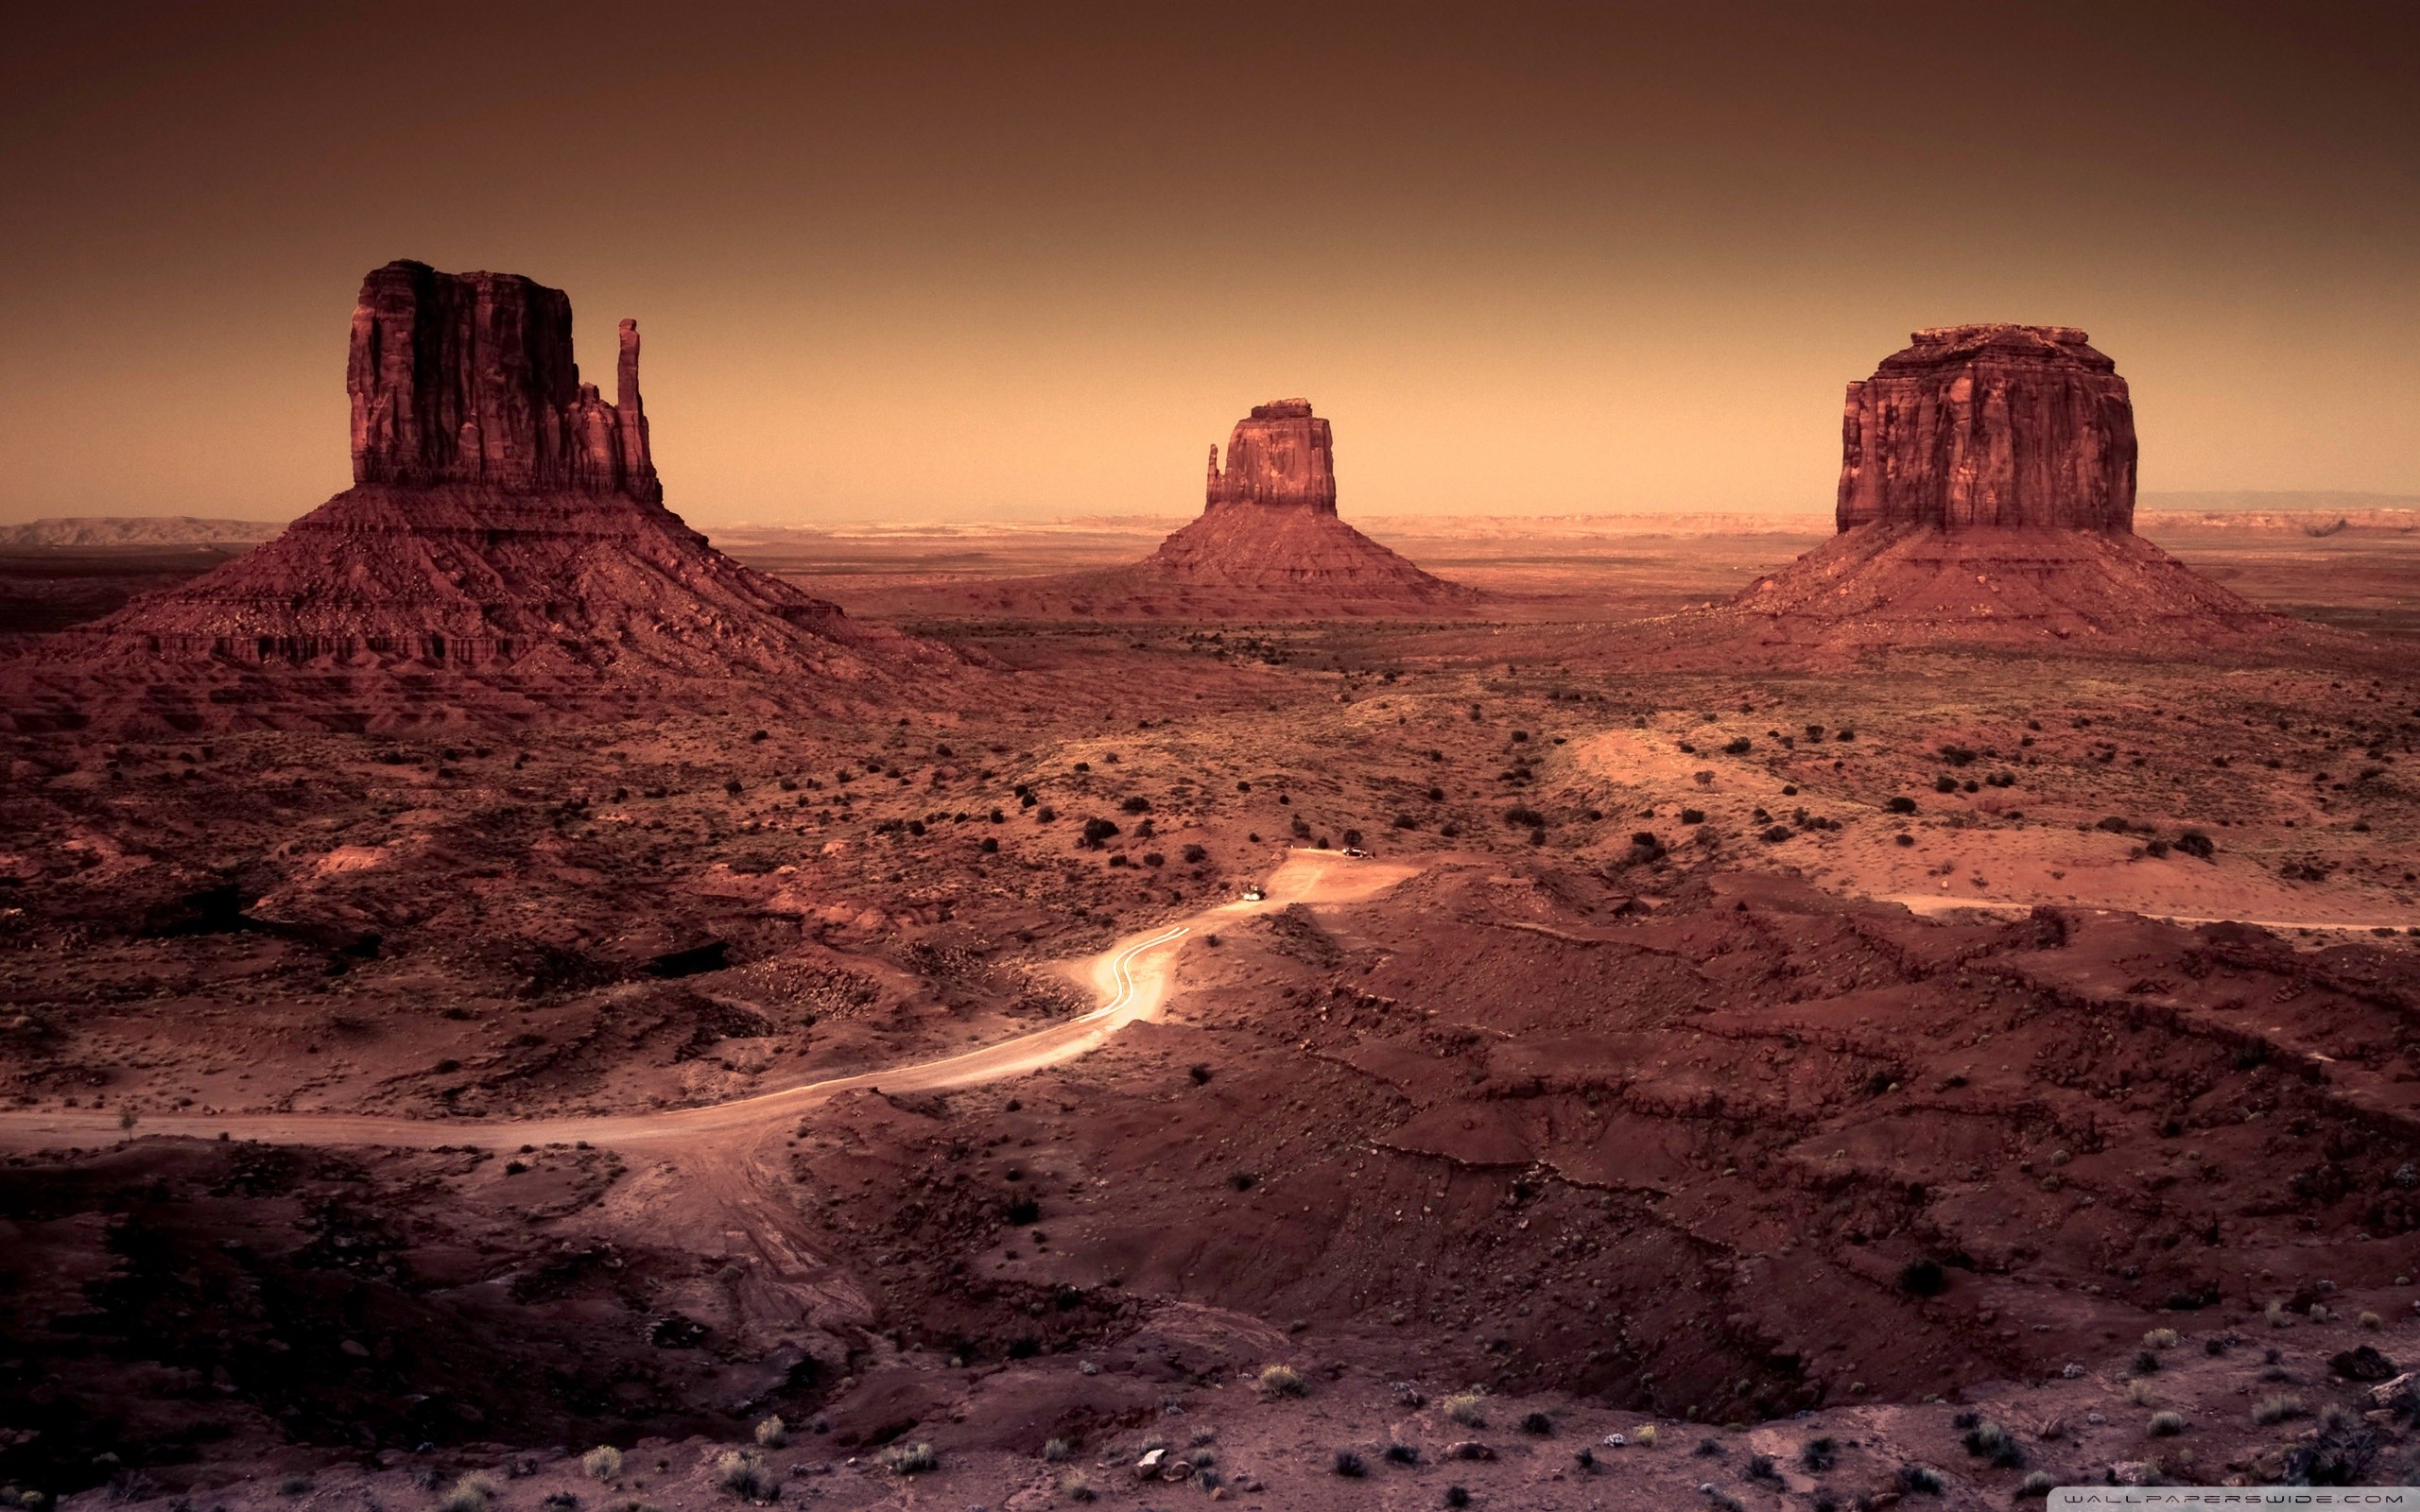  desert arizona monument valley rock formations wallpaper background 2560x1600